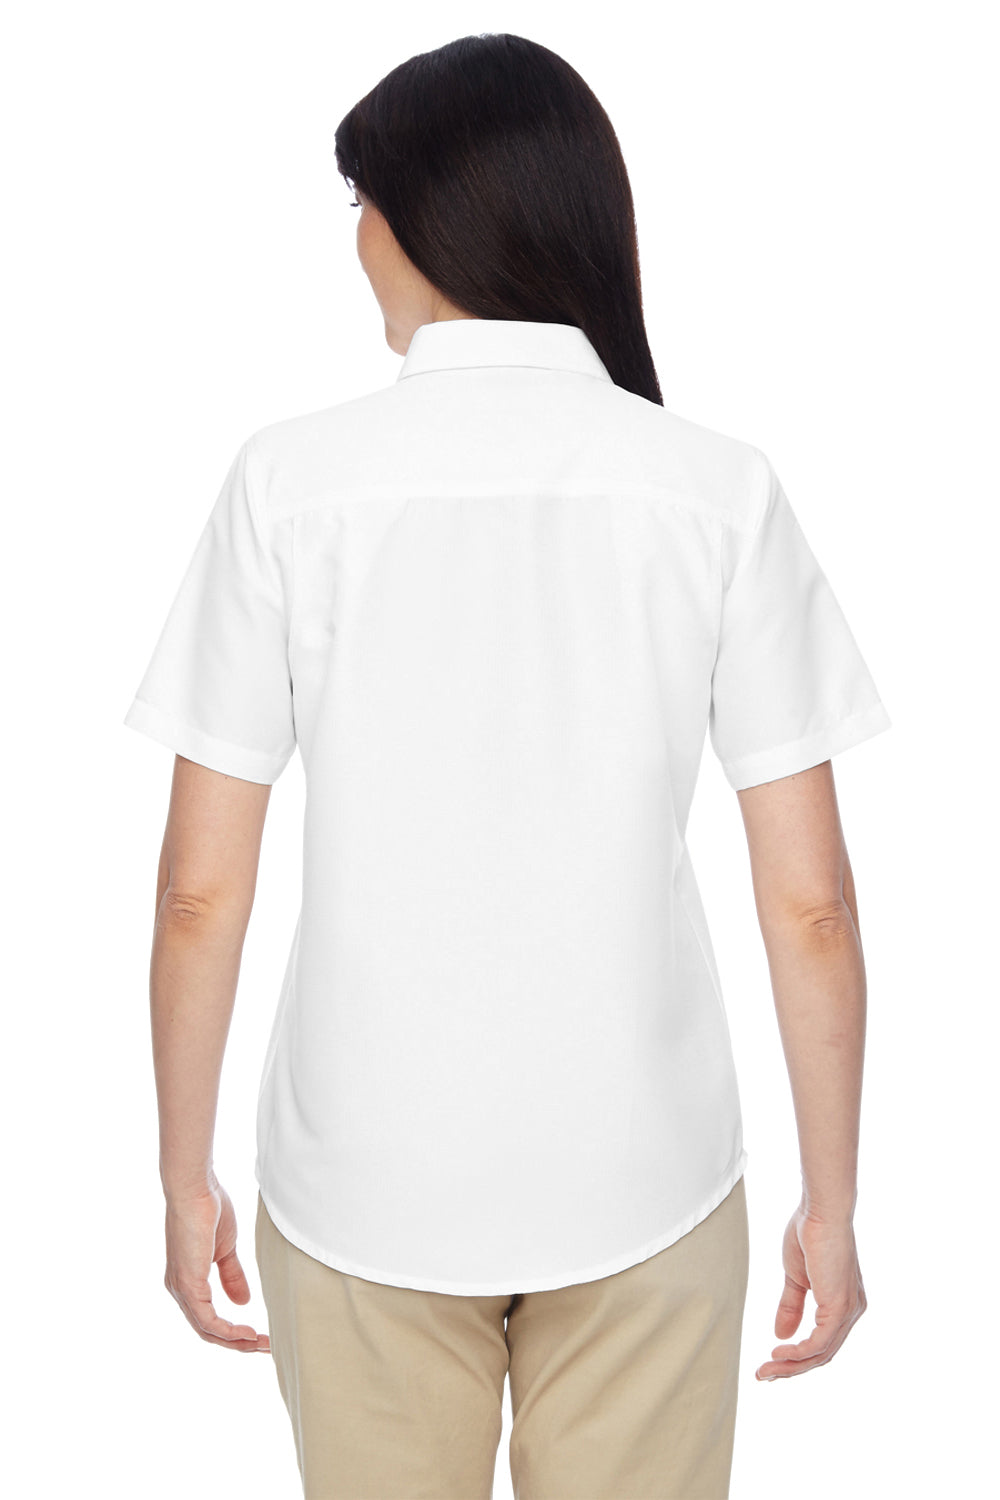 Harriton M580W Womens Key West Performance Short Sleeve Button Down Shirt w/ Double Pockets White Back